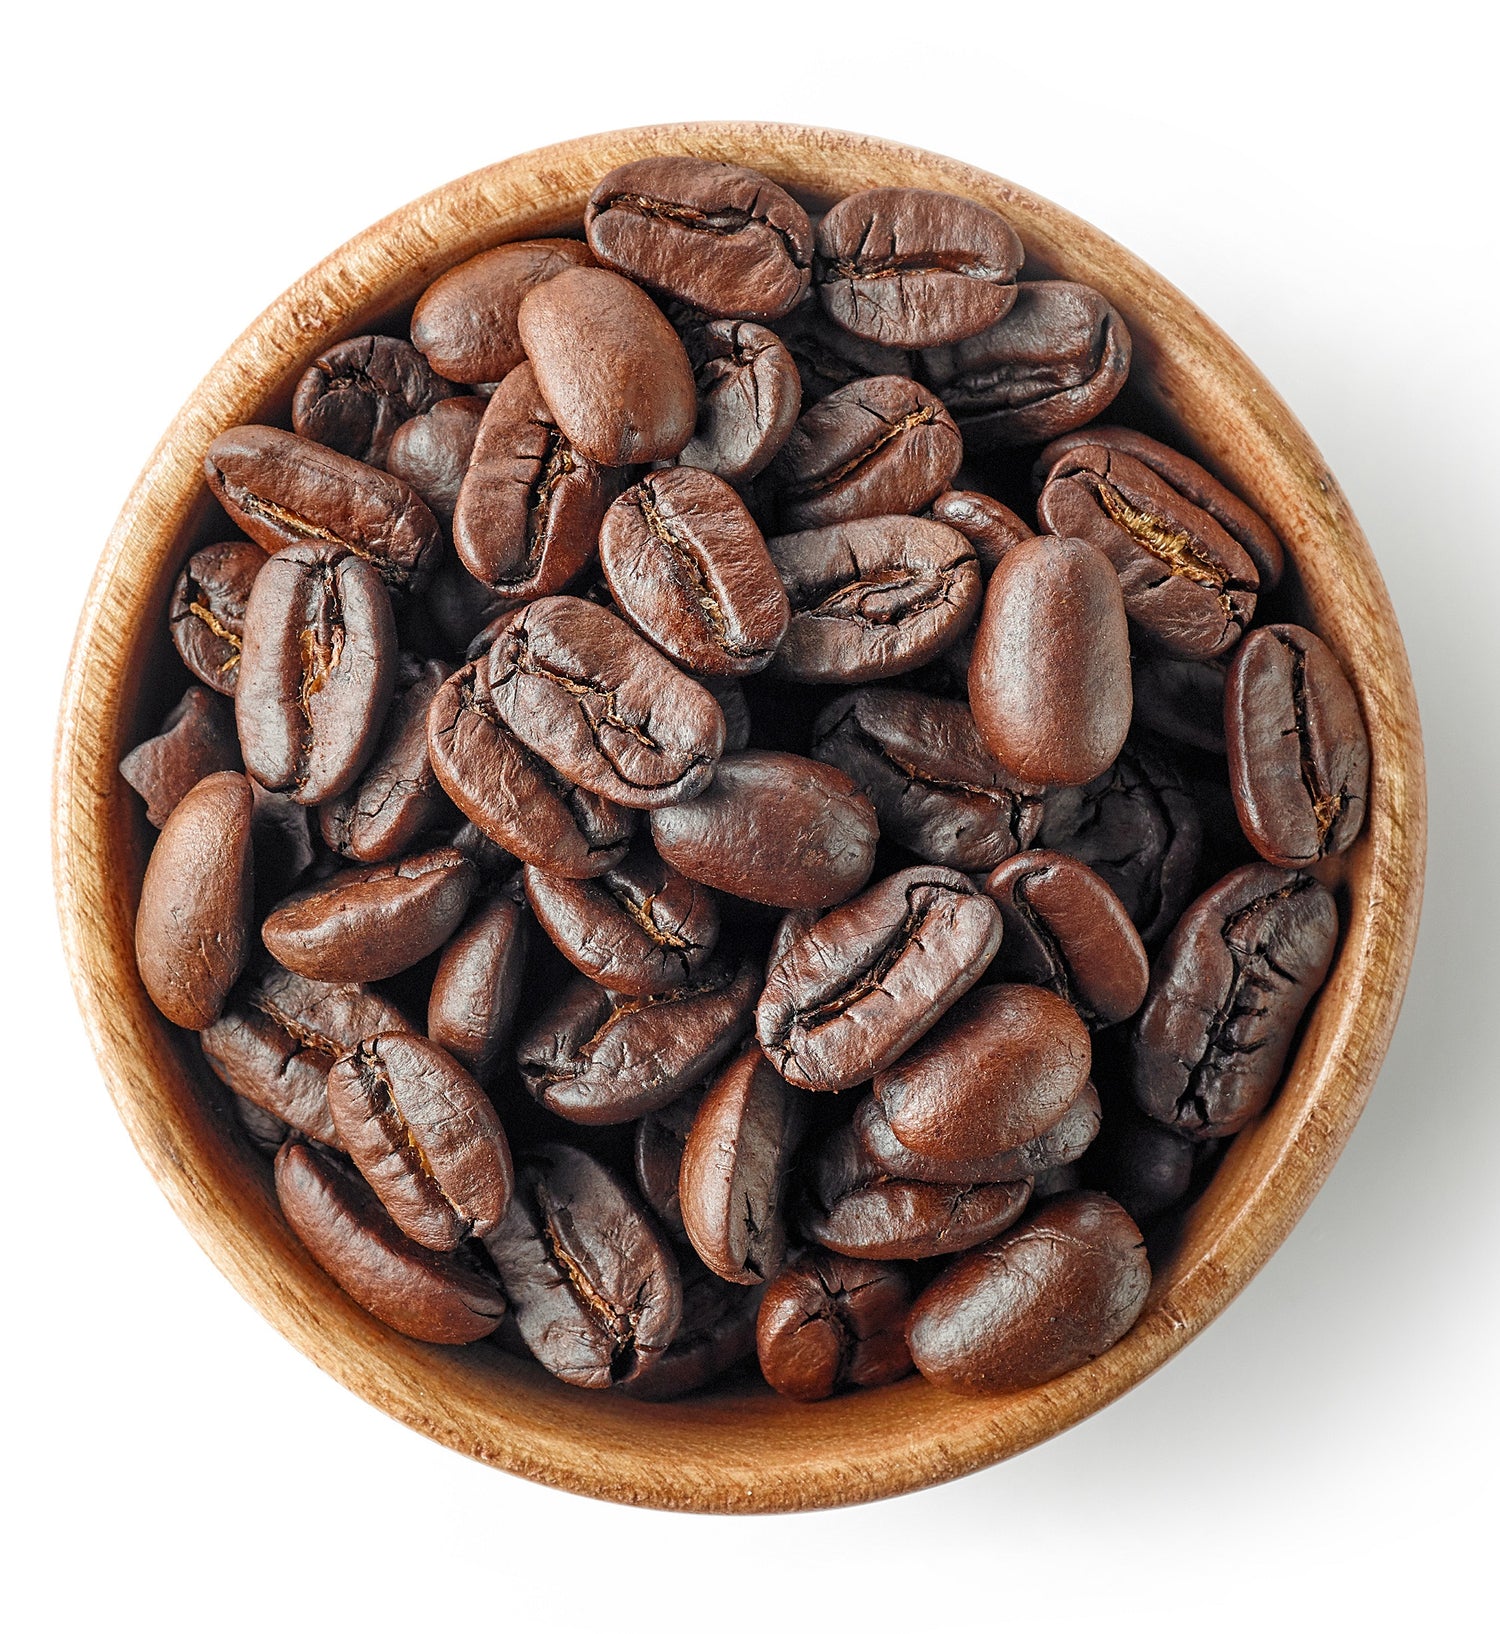 Whole bean coffee samples